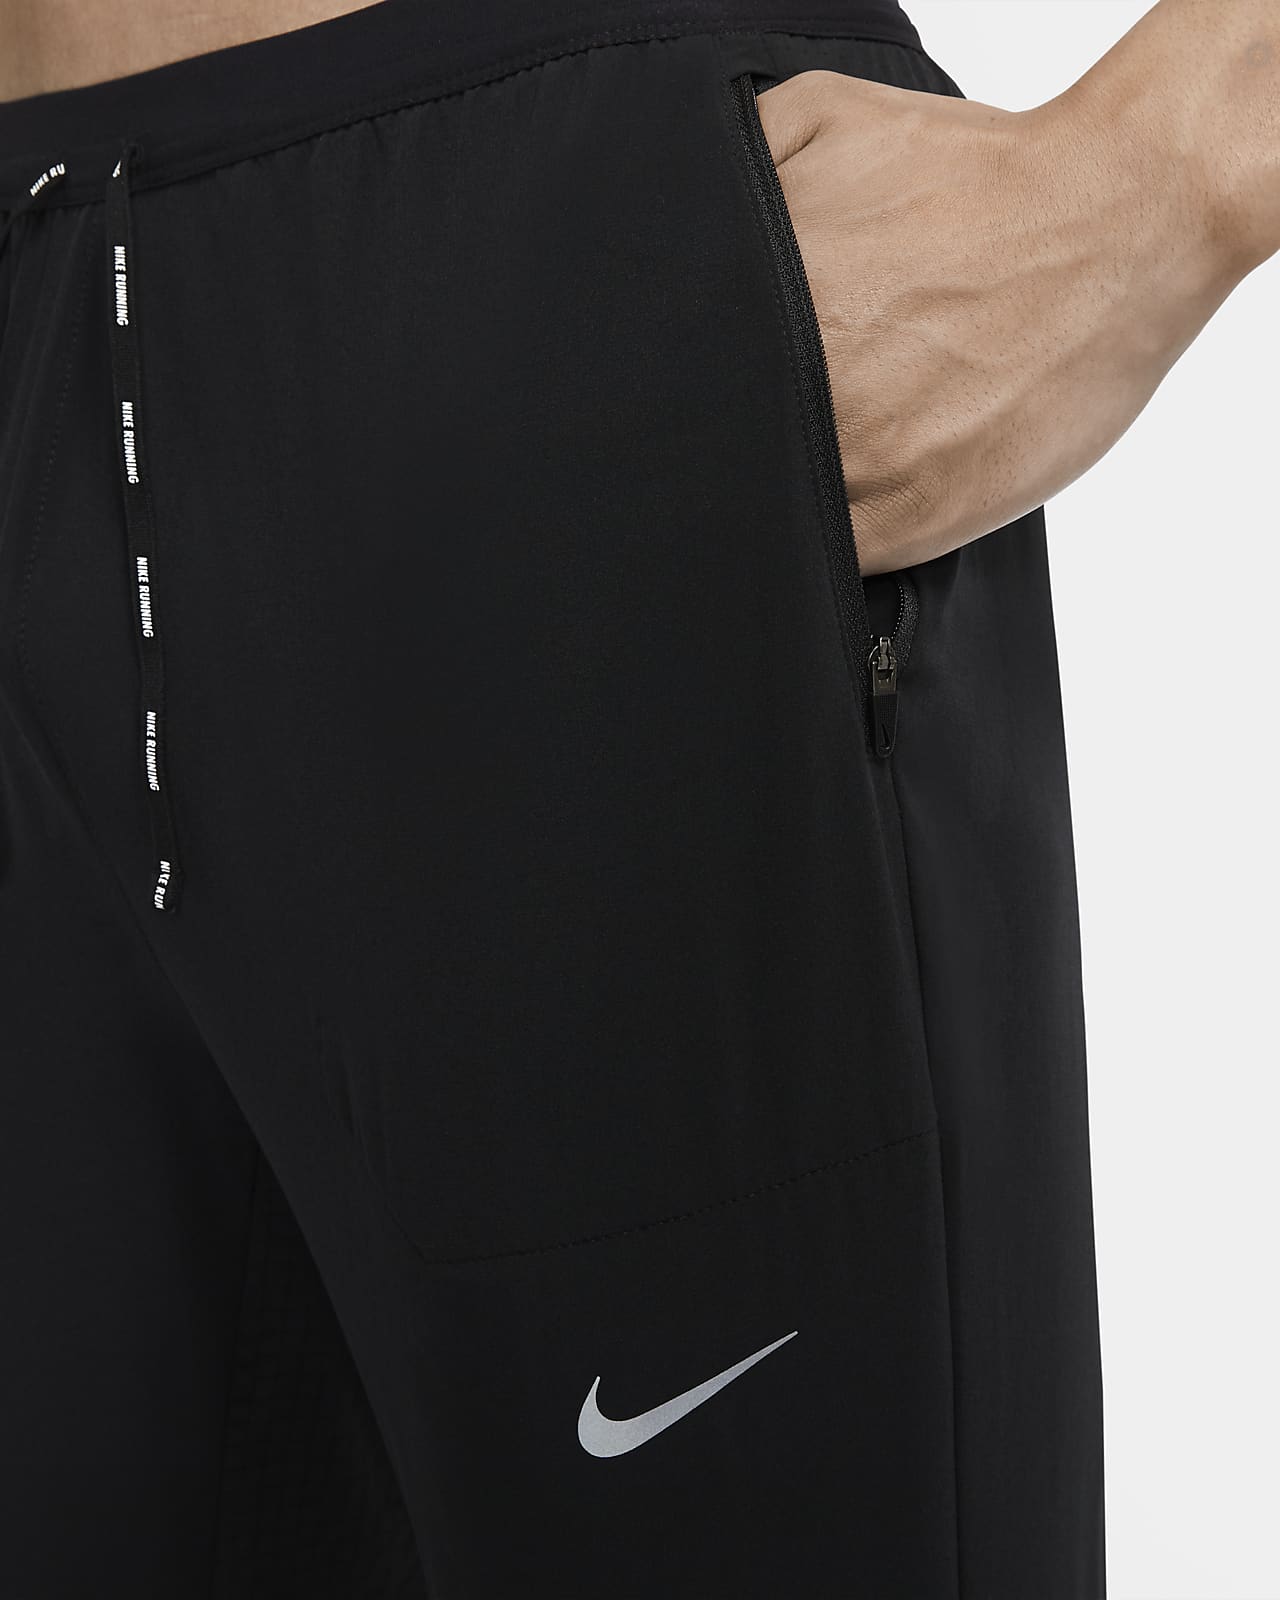 NEW BALANCE All Motion JOGGERS Mens Running Pants Black Size S, M, L, XL |  eBay